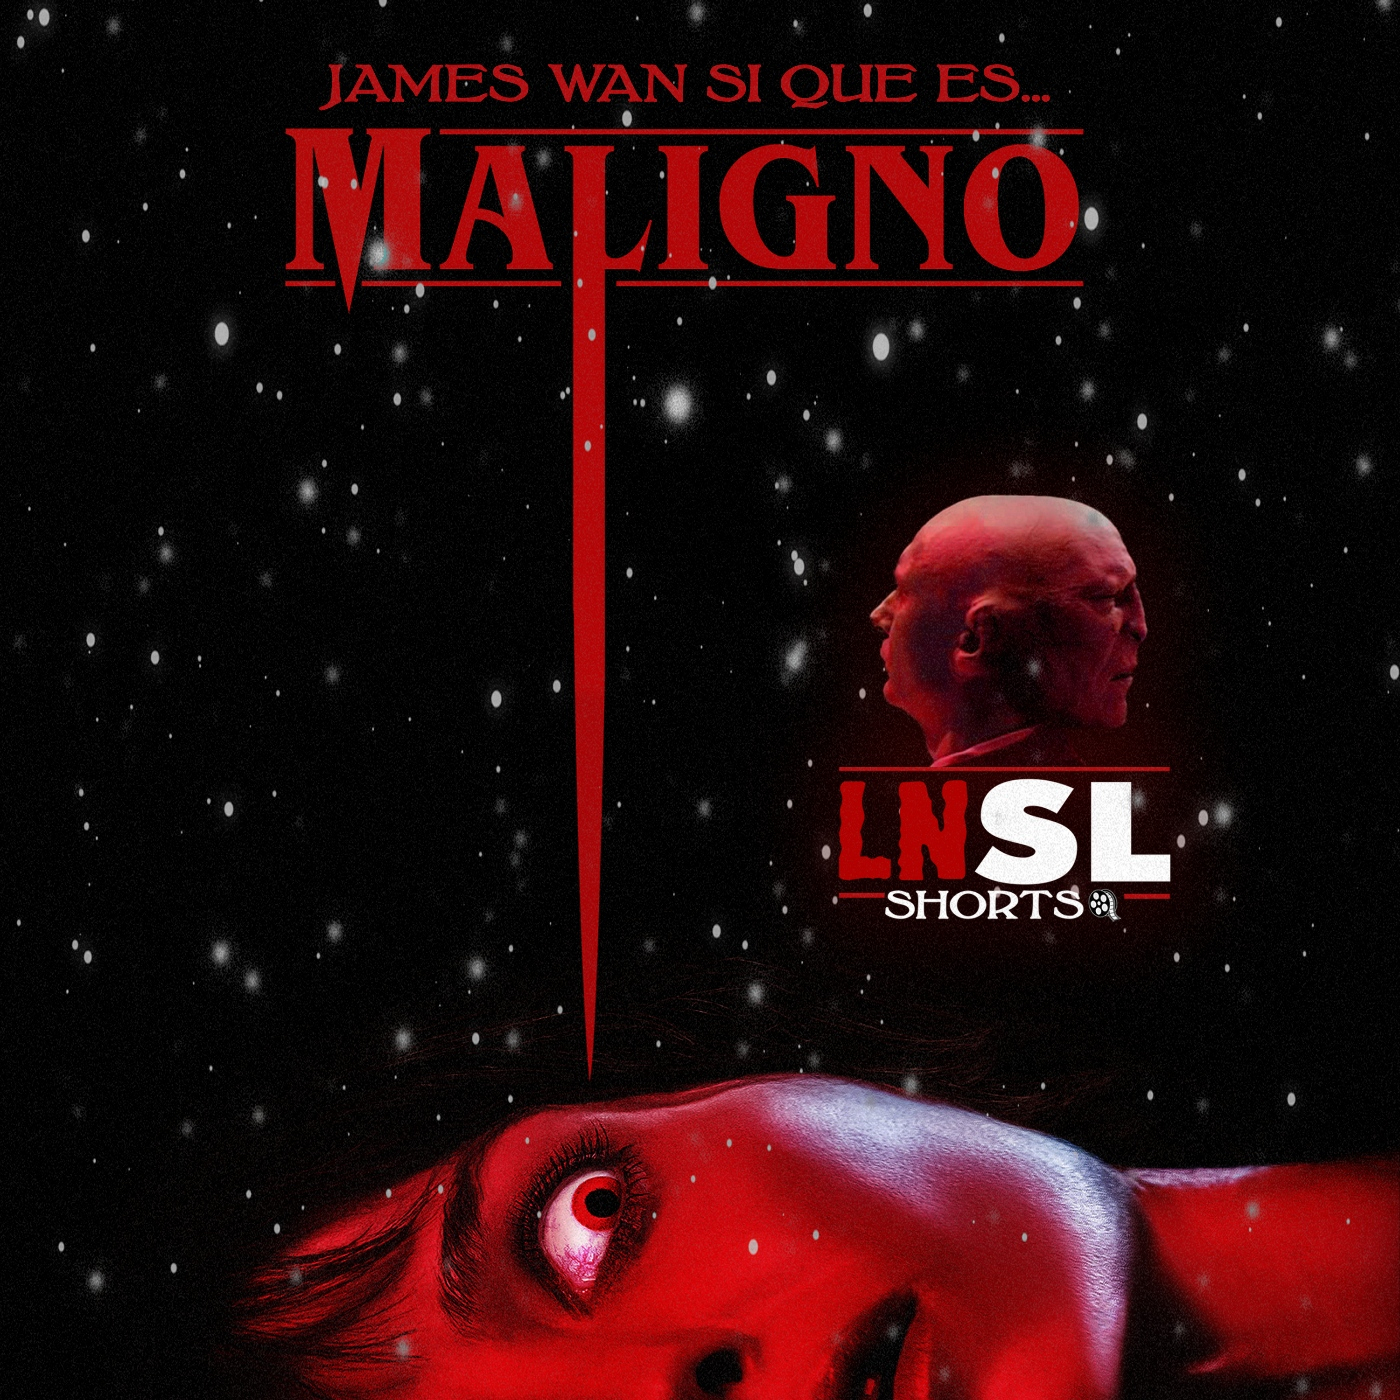 LNSL Shorts: Maligno (James Wan, 2021)